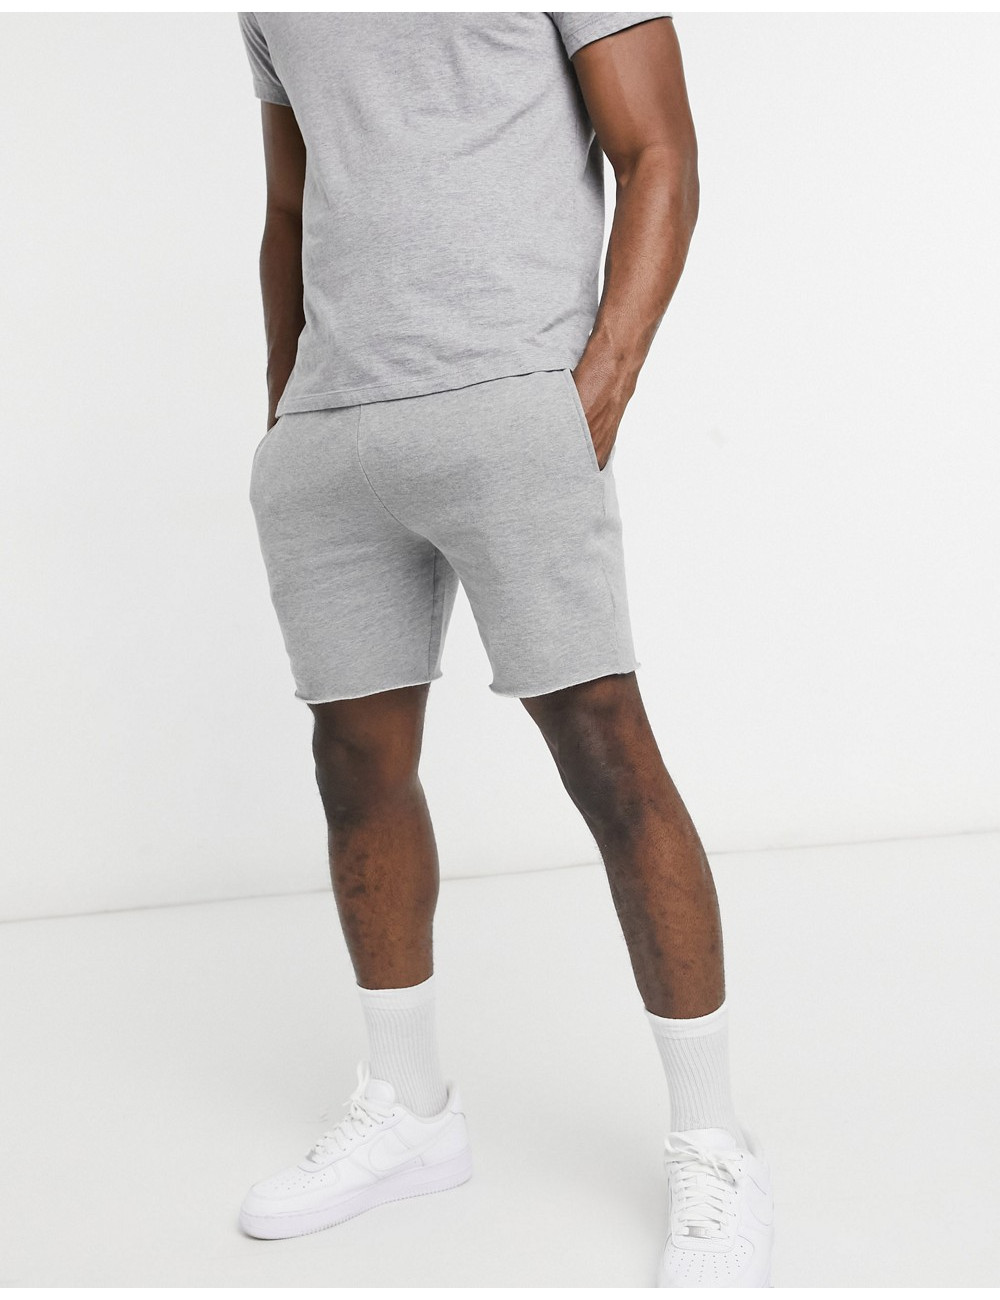 Topman dry shorts in grey